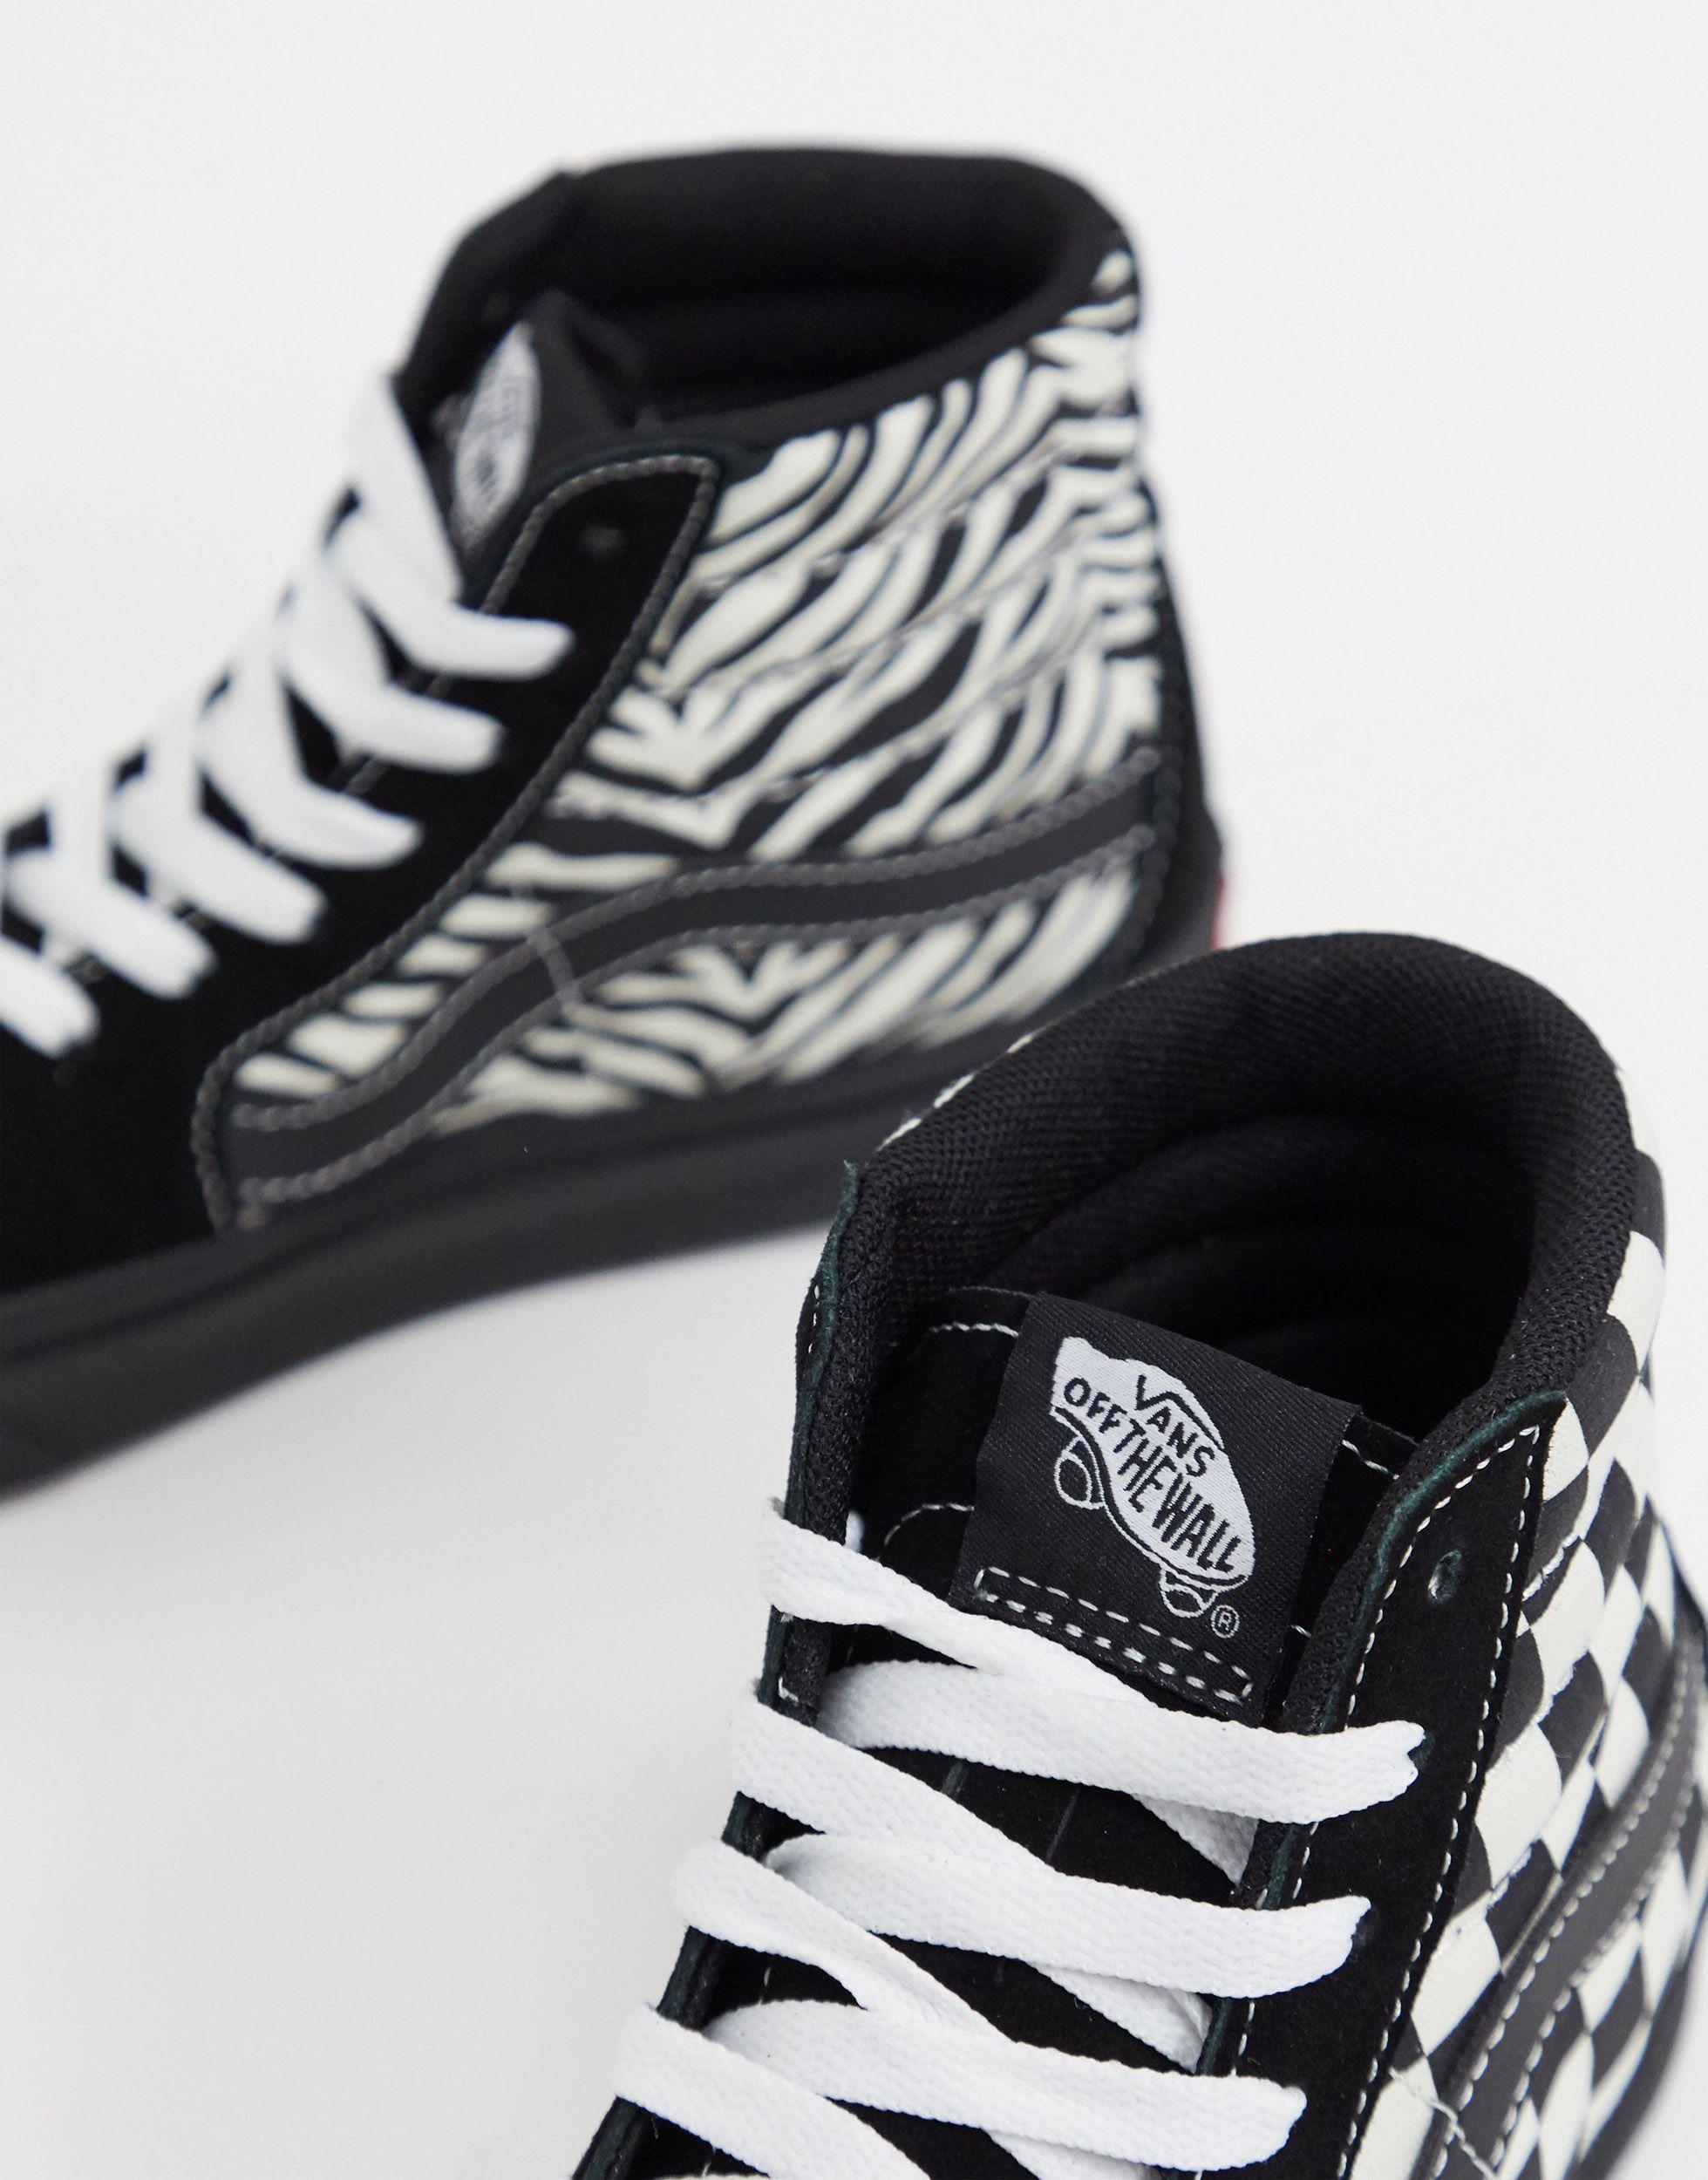 Vans Rubber Sk8-hi Zebra Sneakers in Black | Lyst